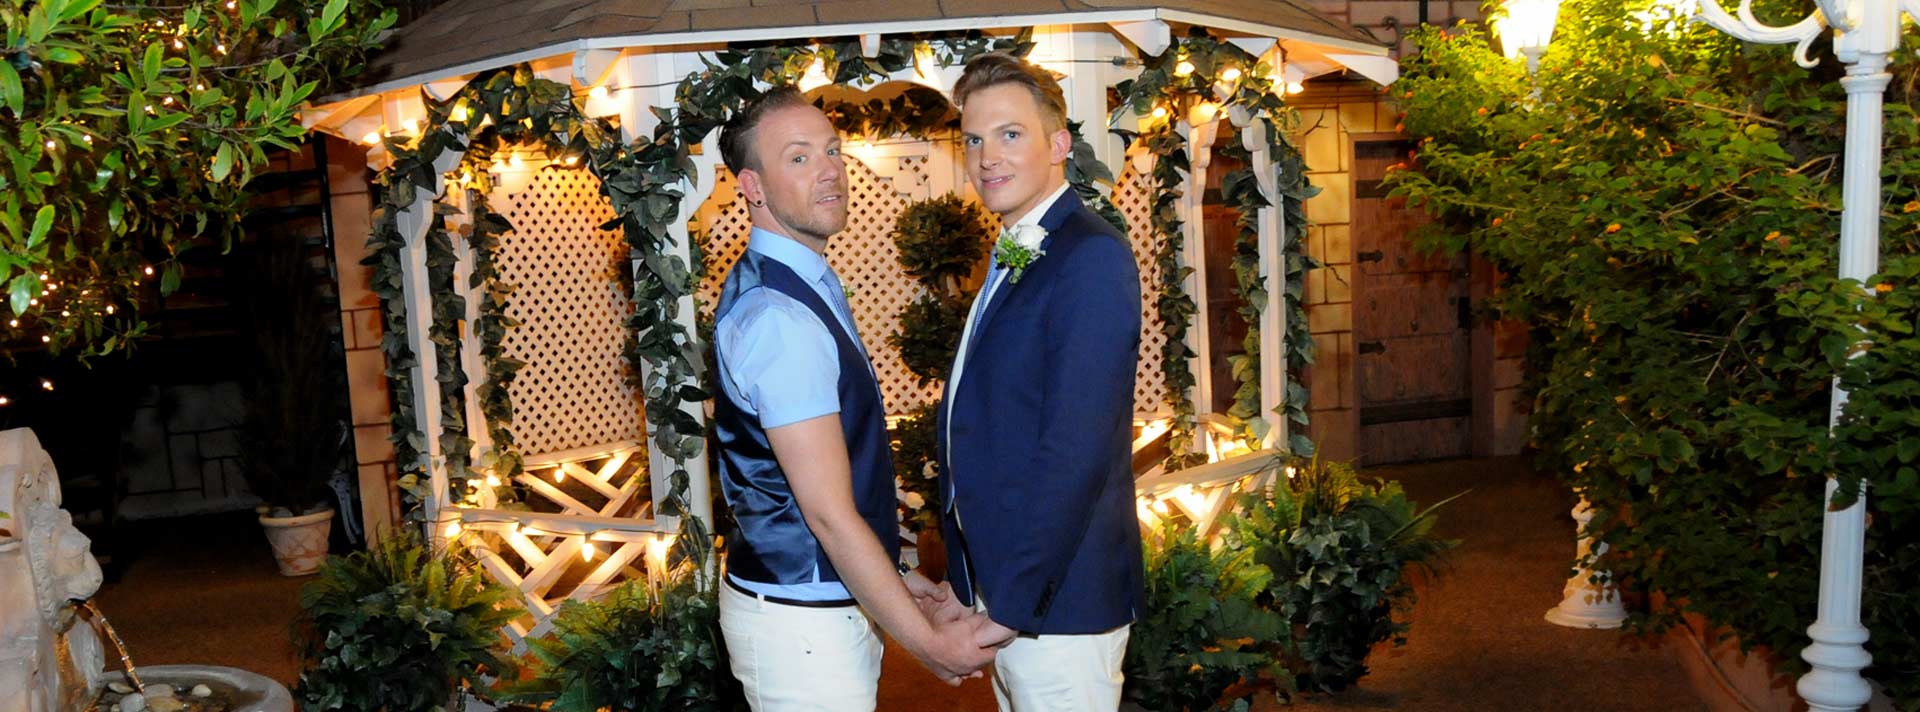 las wedding vegas reception Gay friendly